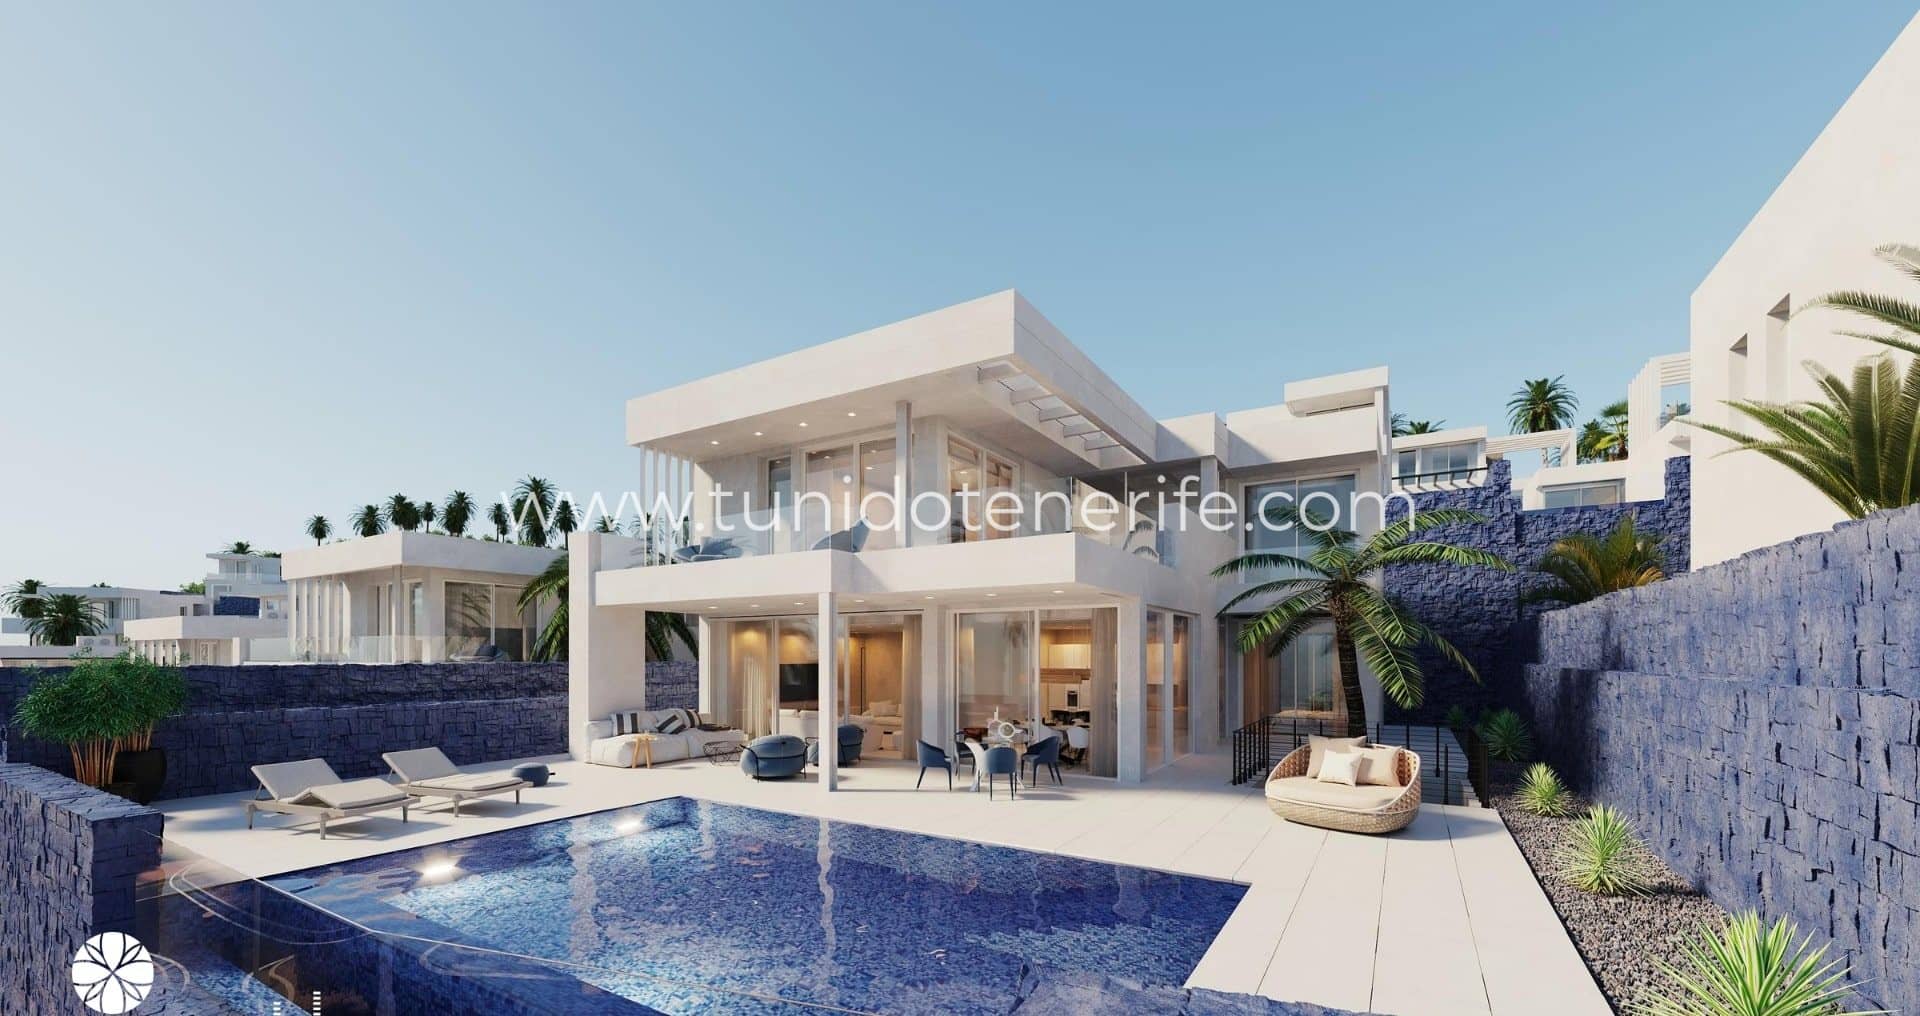 Luxury villas for sale, South Tenerife, Tu Nido Tenerife